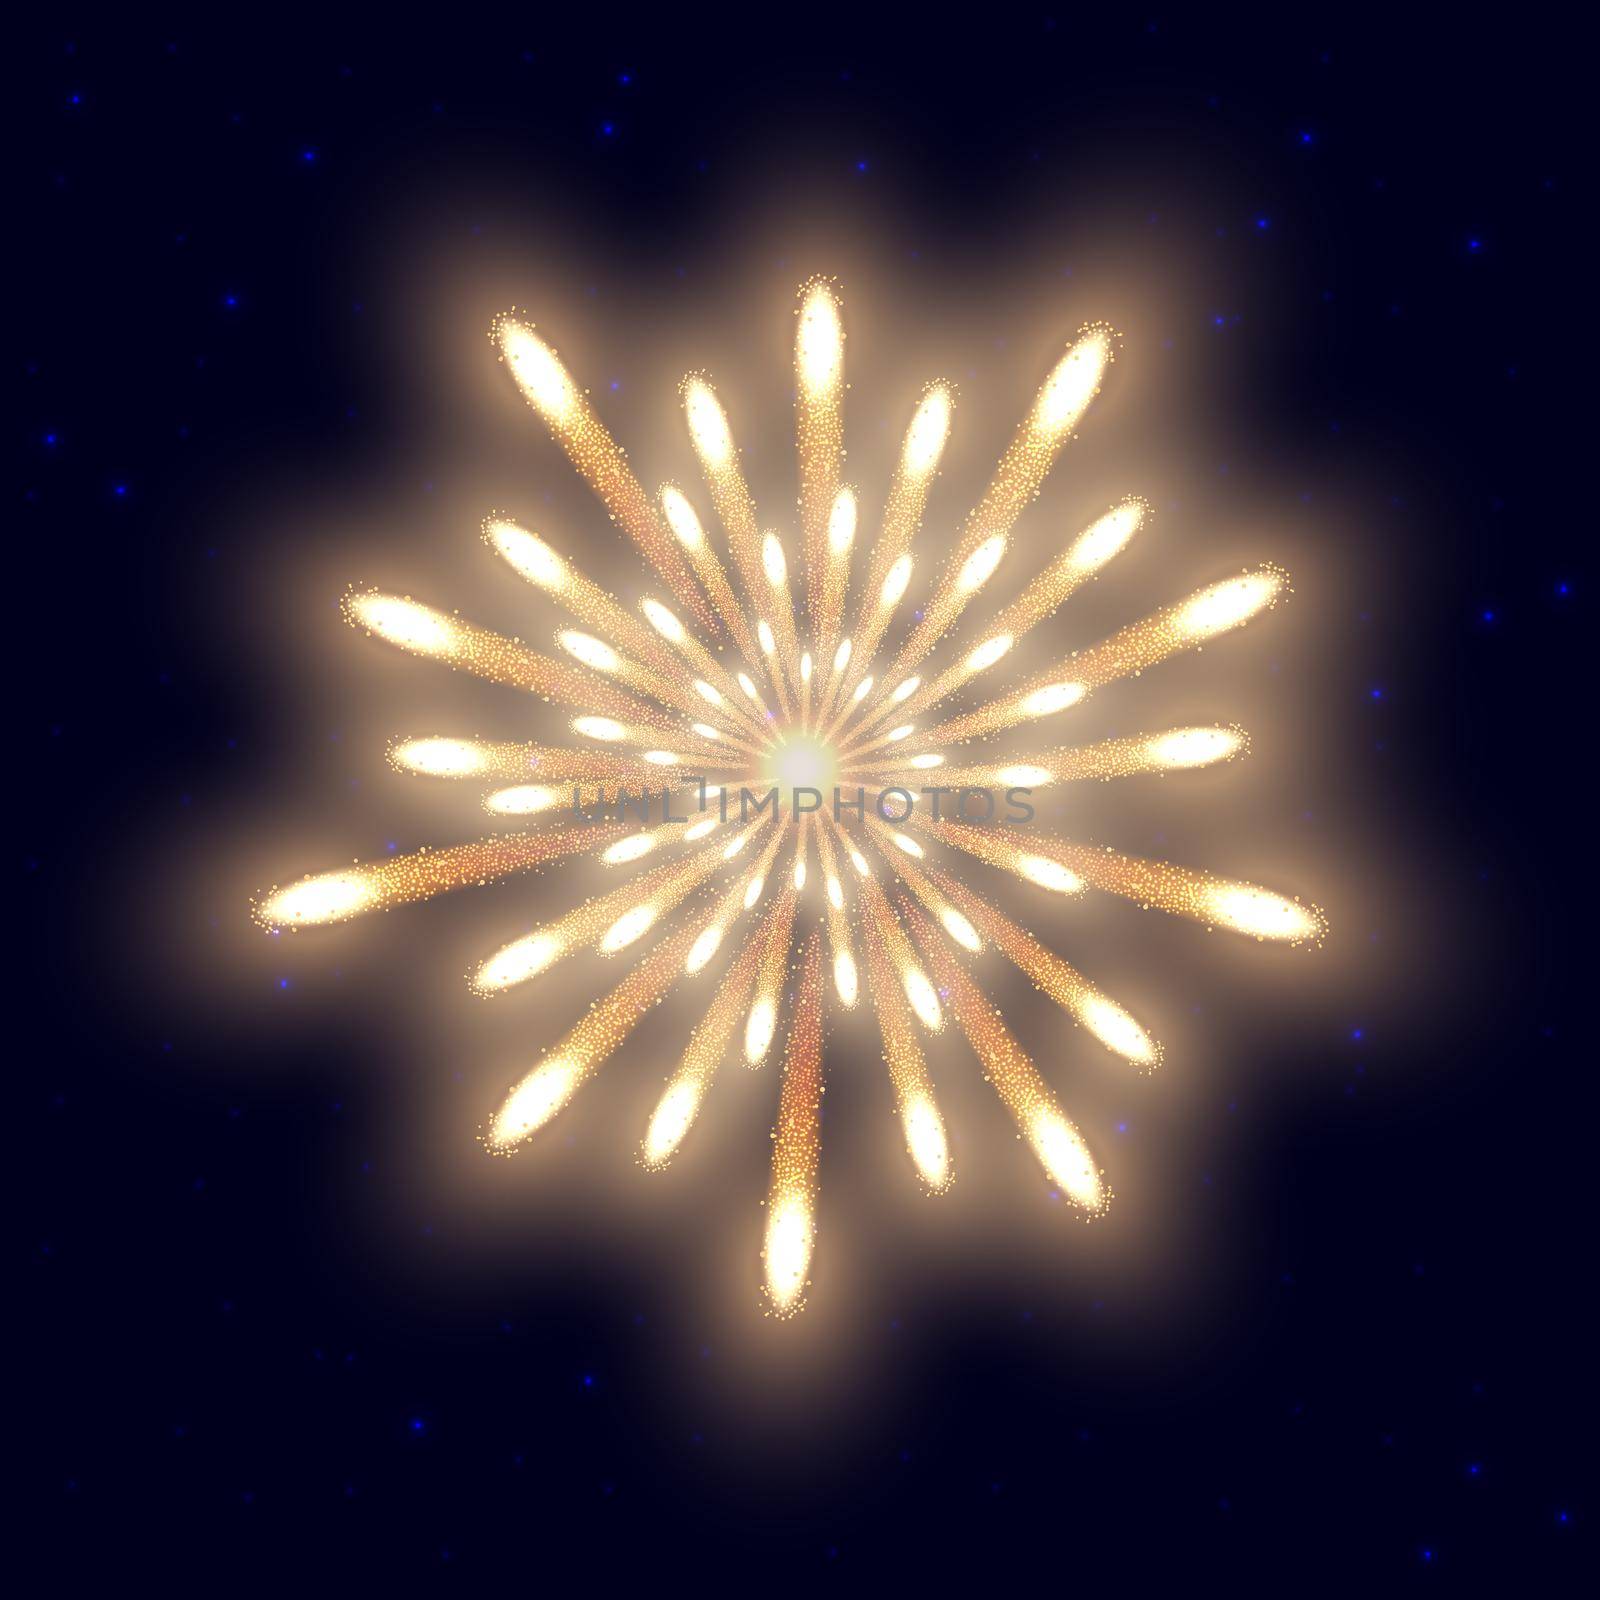 Fireworks on the night sky background. illustration by Marin4ik